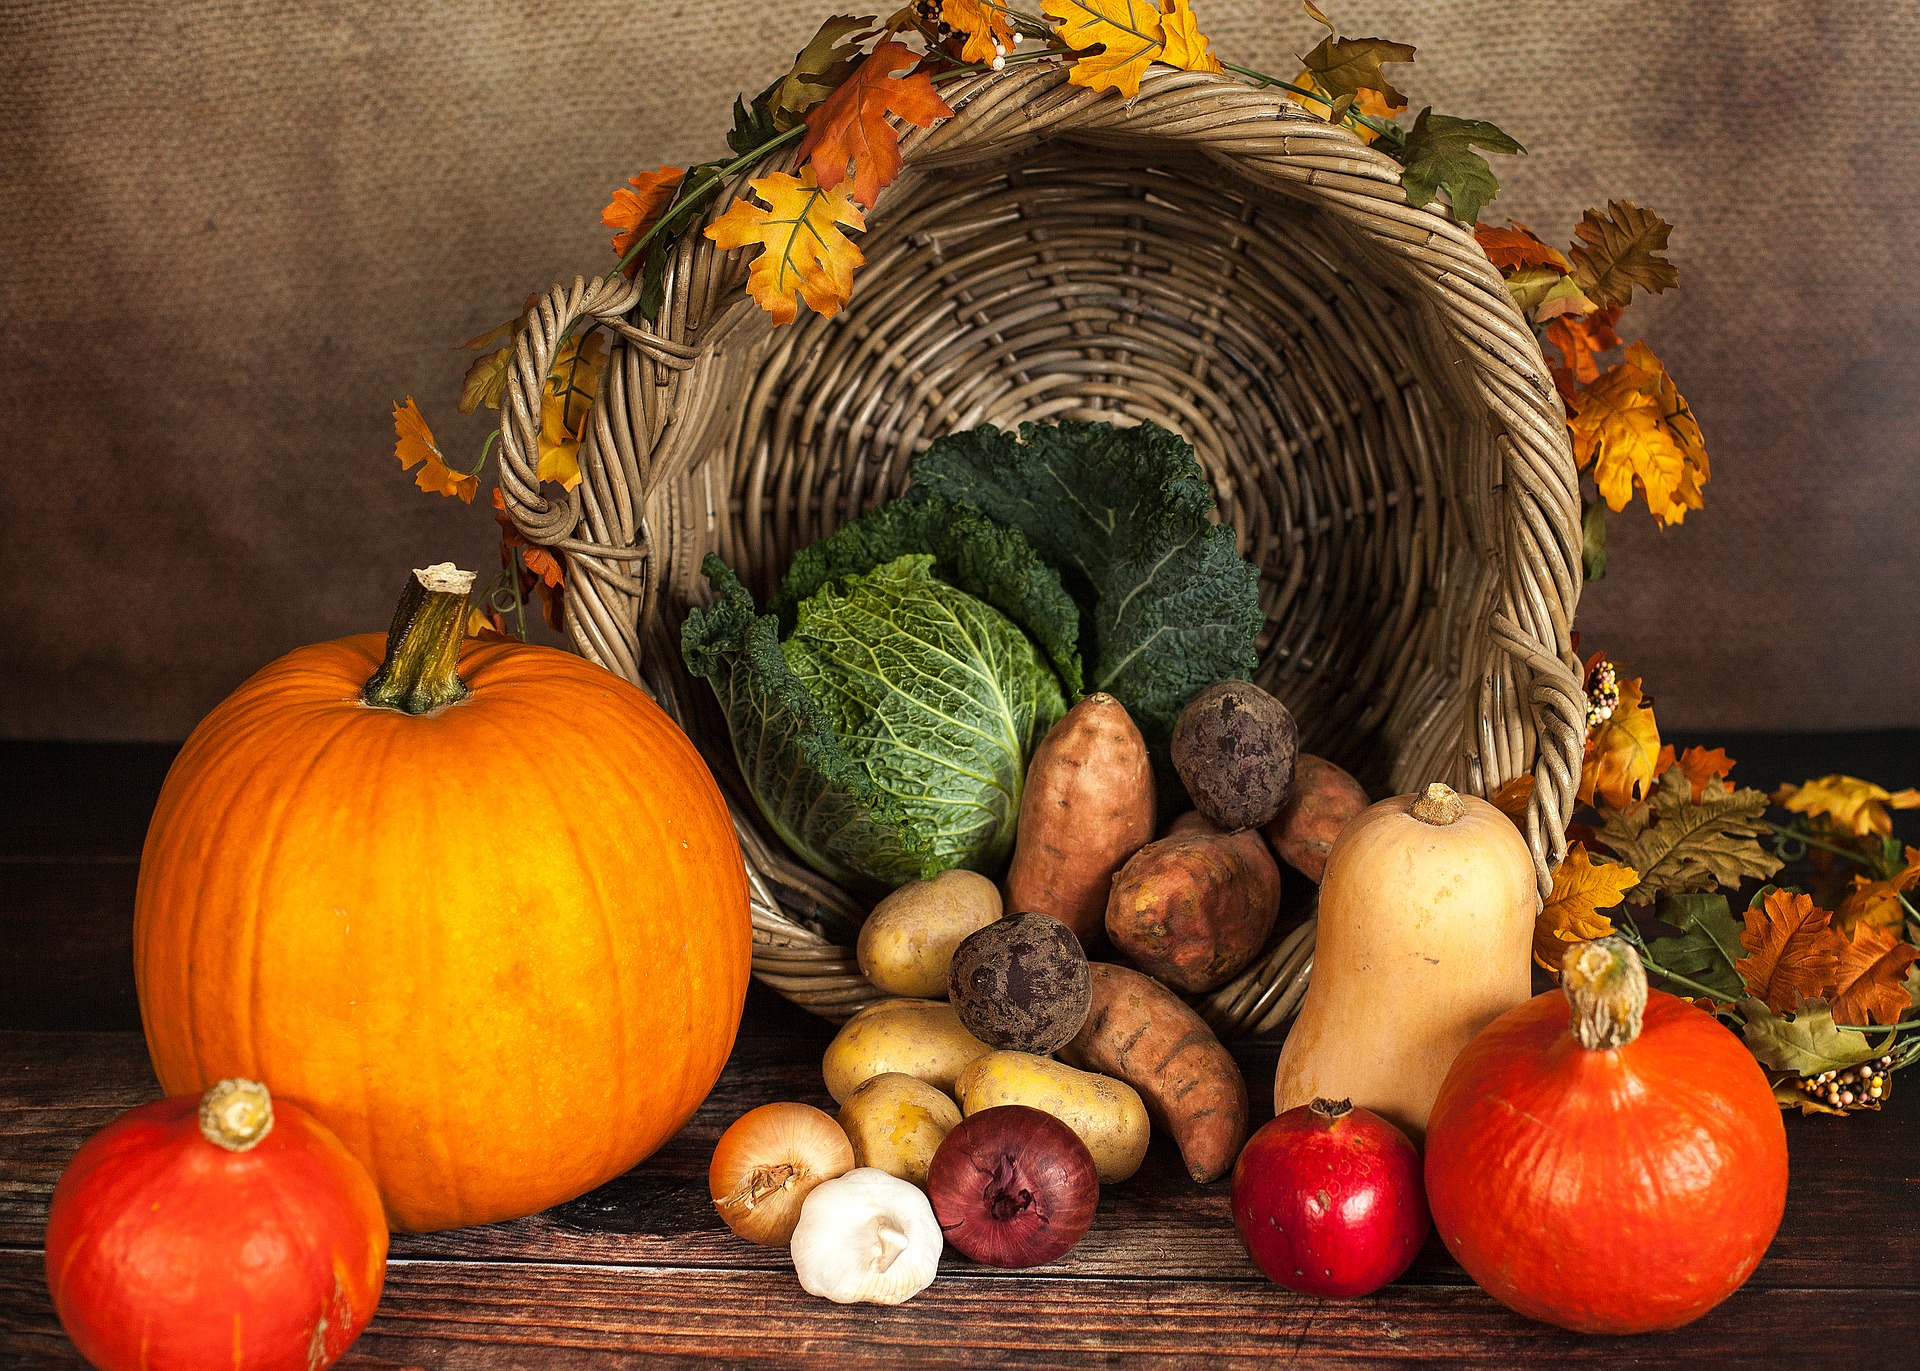 Pumpkin, vegetables, autumn Image by Sabrina Ripke